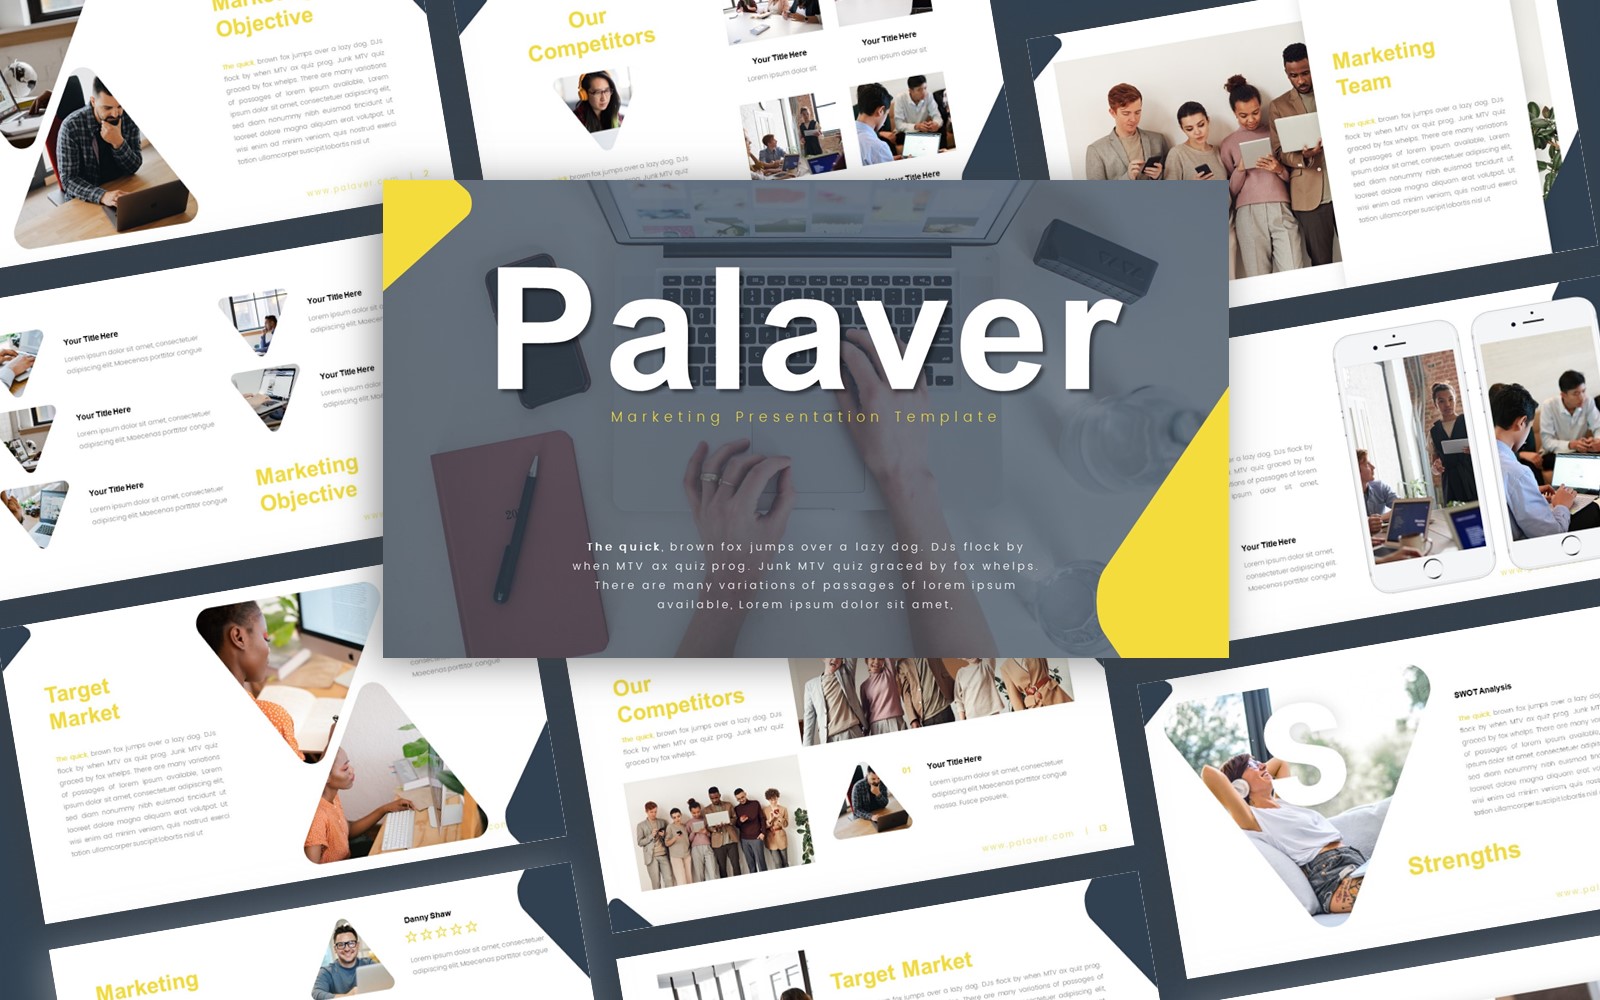 Palaver Marketing Presentation PowerPoint template